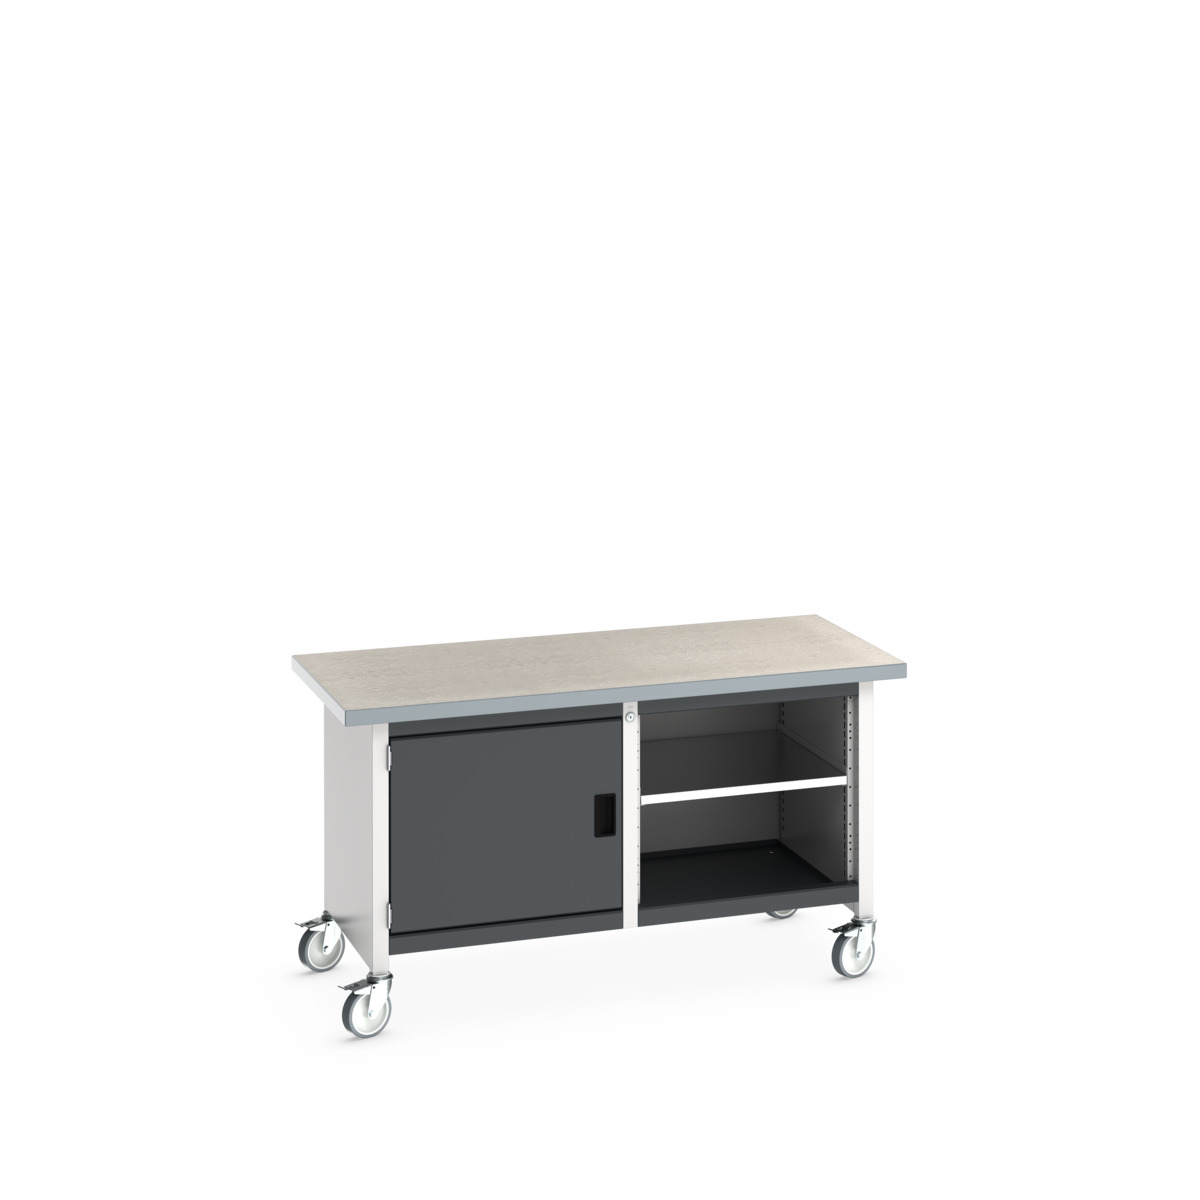 41002096. - cubio mobile storage bench (lino)